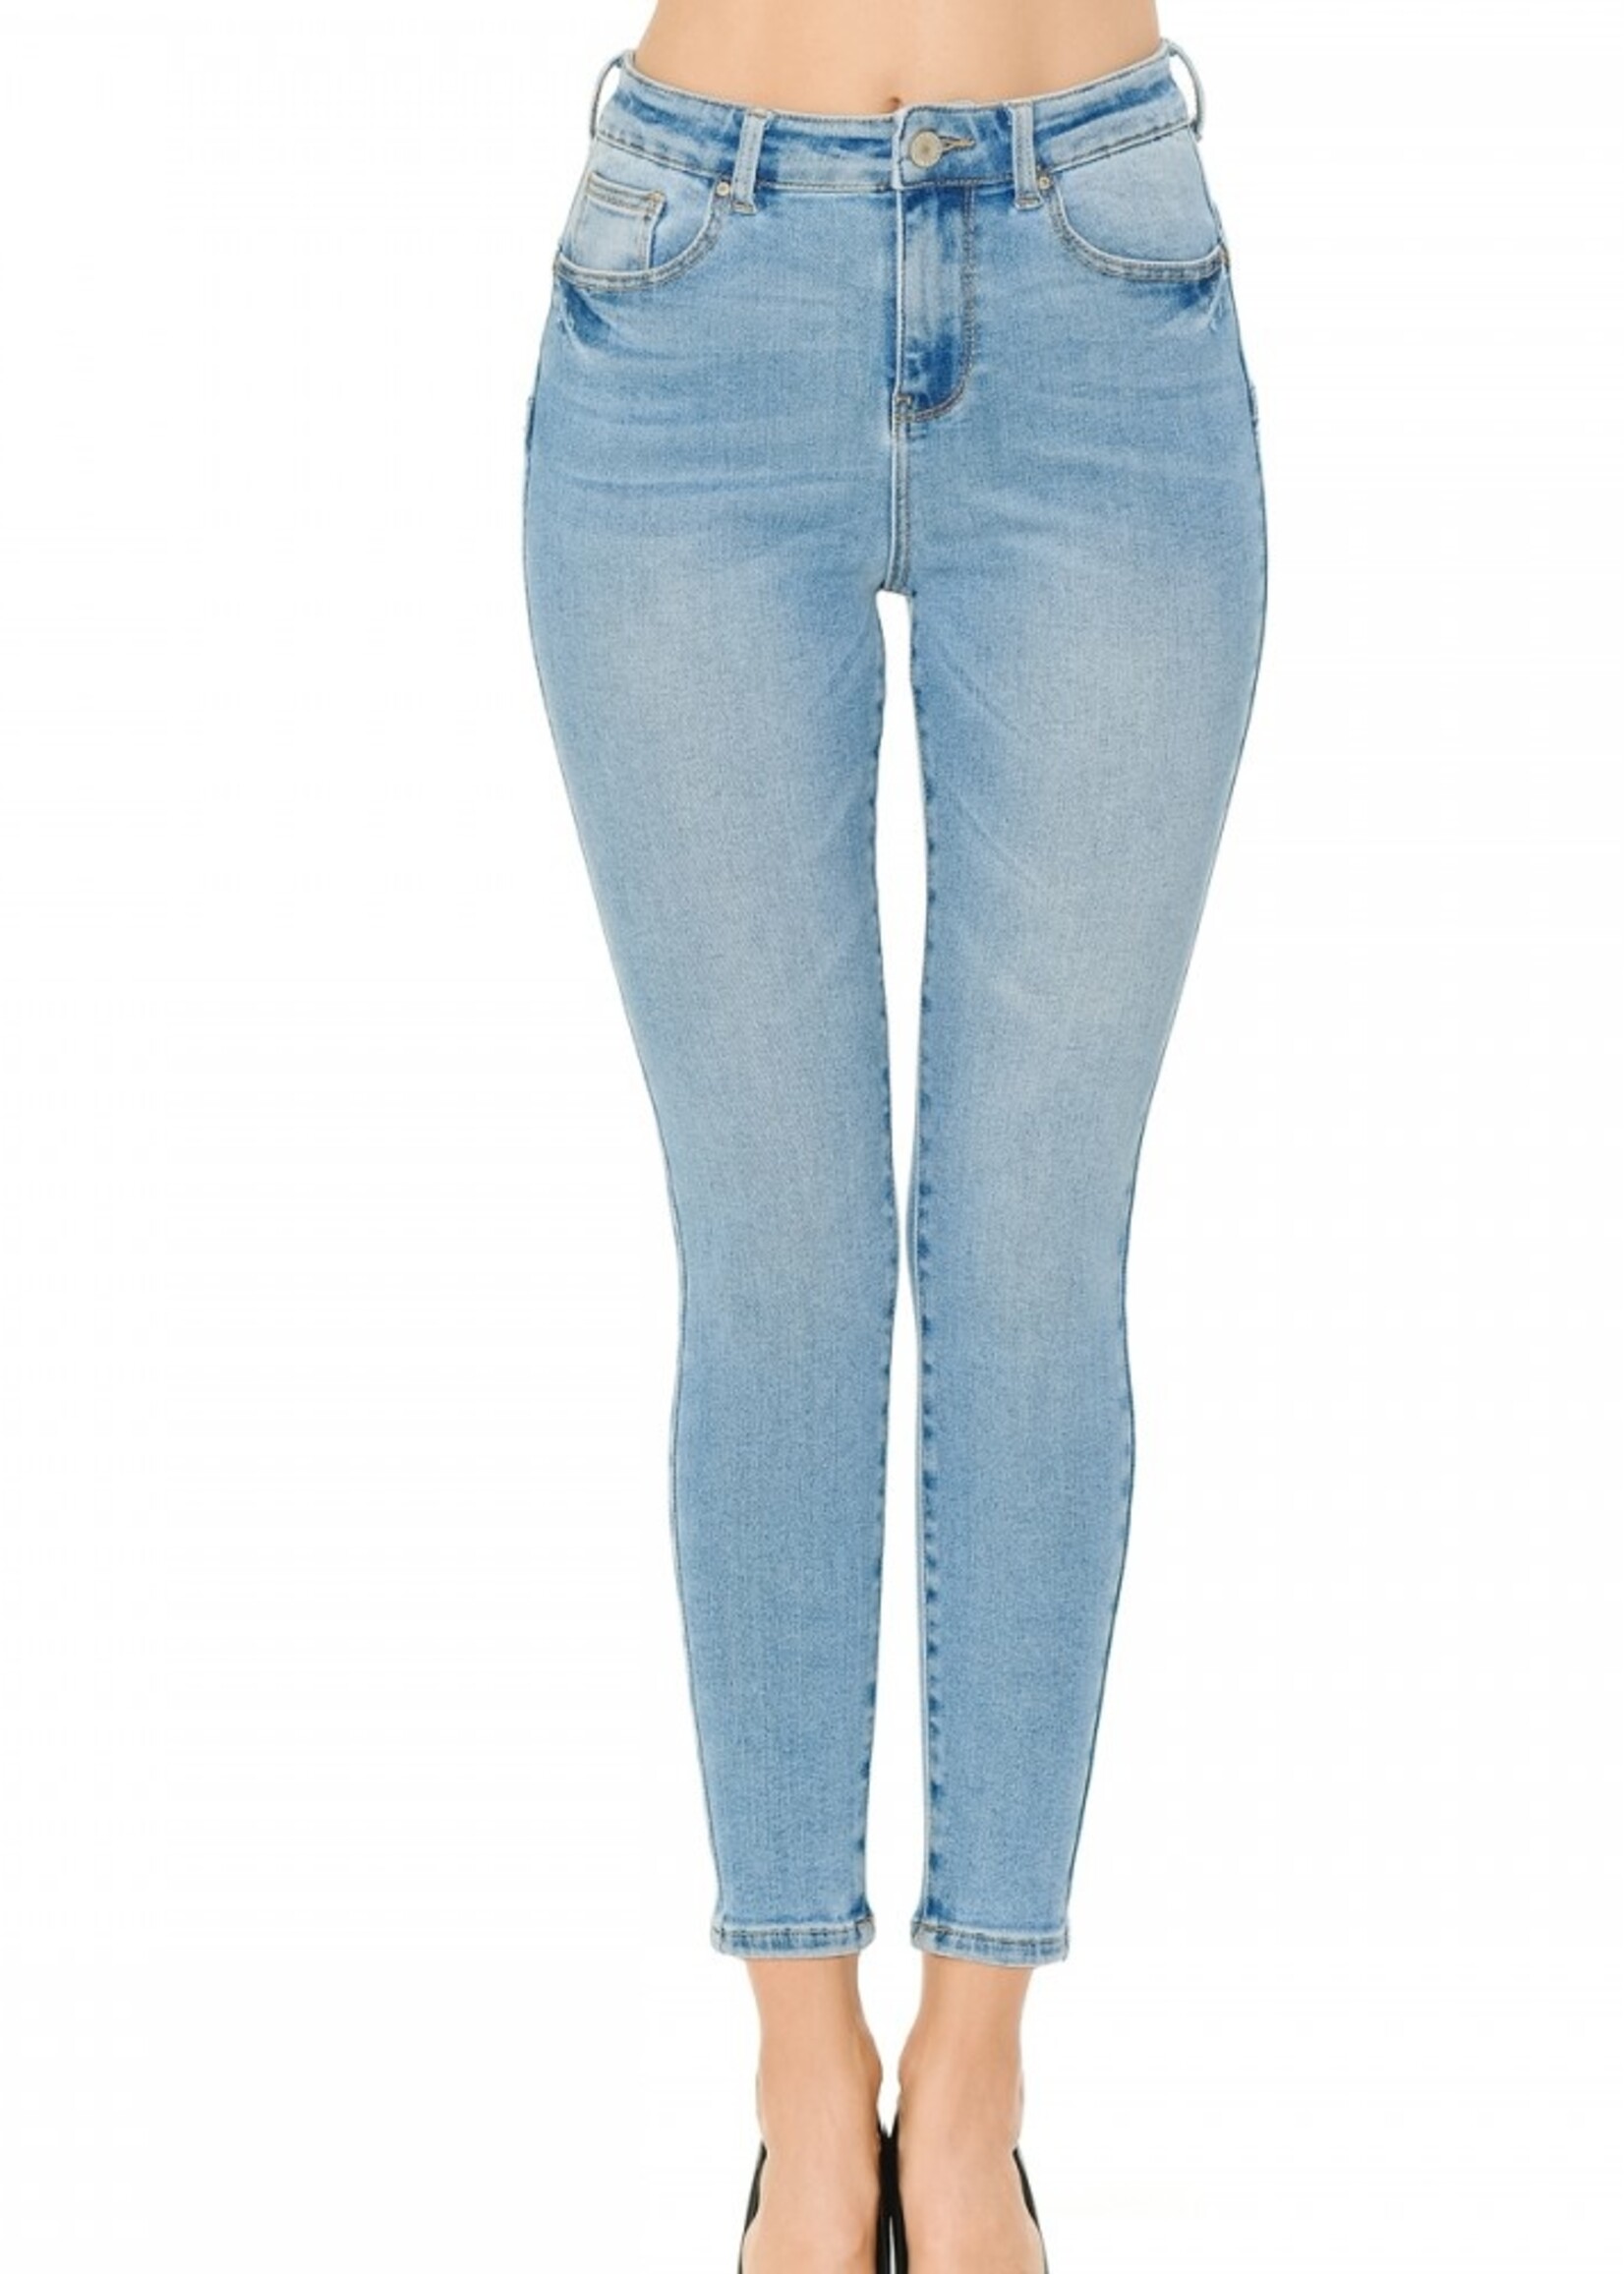 https://cdn.shoplightspeed.com/shops/634146/files/46576976/1652x2313x1/wax-jeans-wax-jeans-push-up-vintage-classic-5-pock.jpg